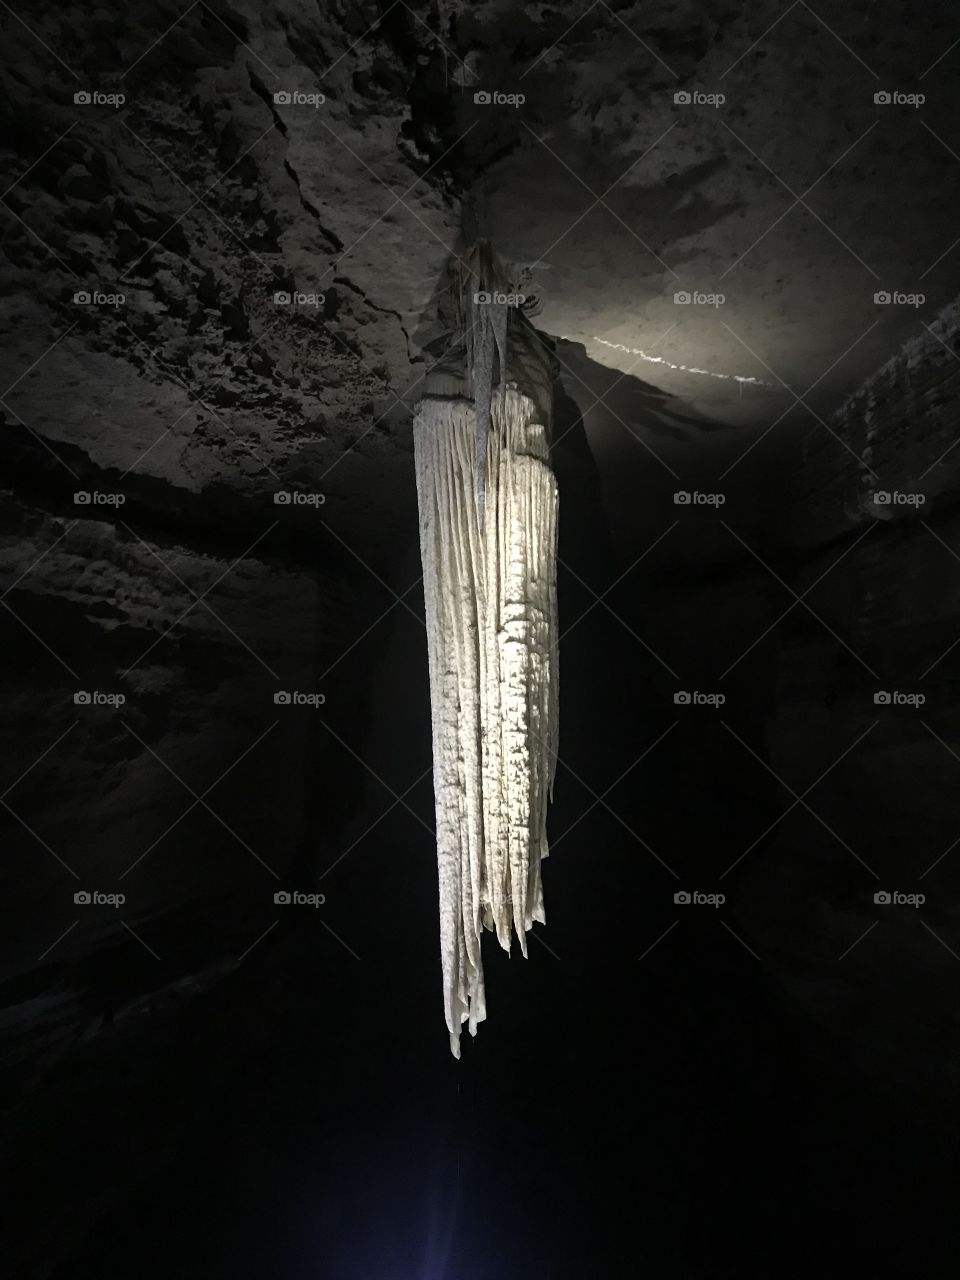 World’s heaviest stalactite. 